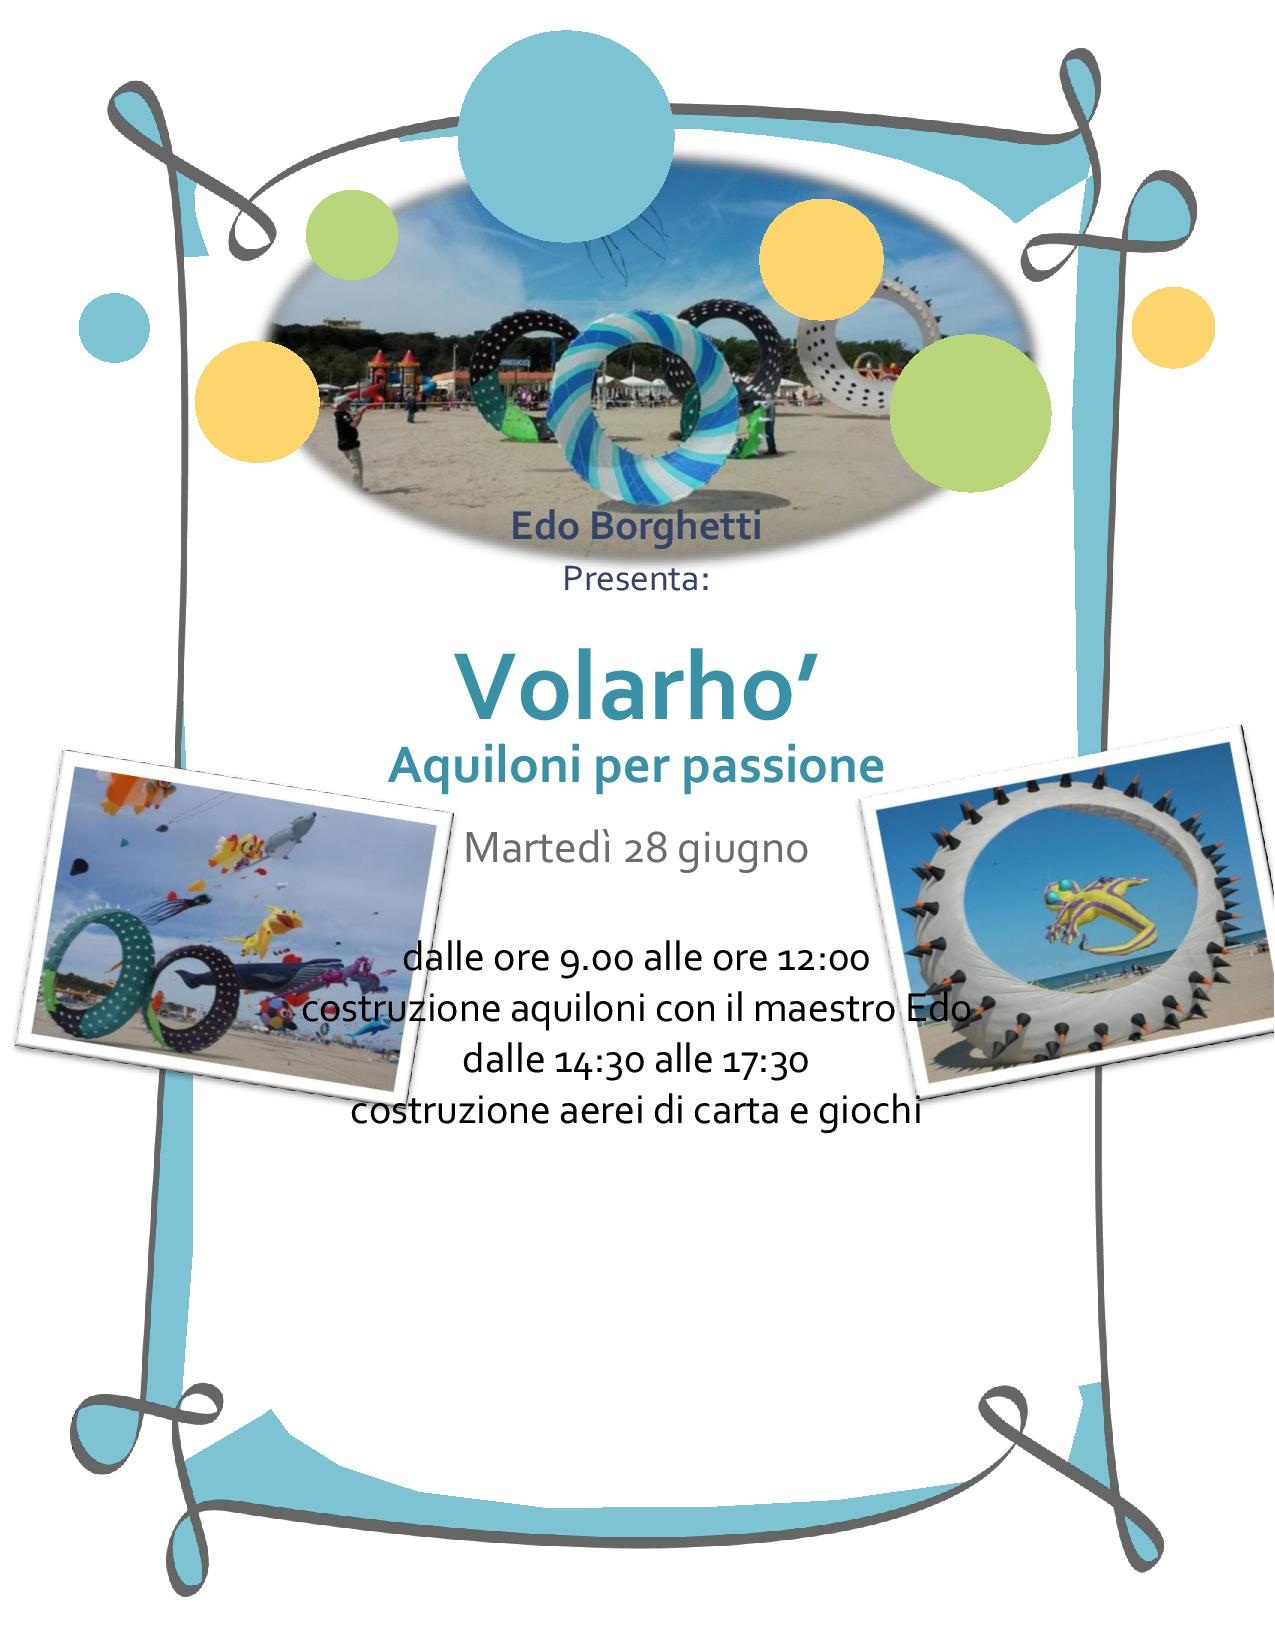 VOLANTINO VOLARHO -page-001locupp